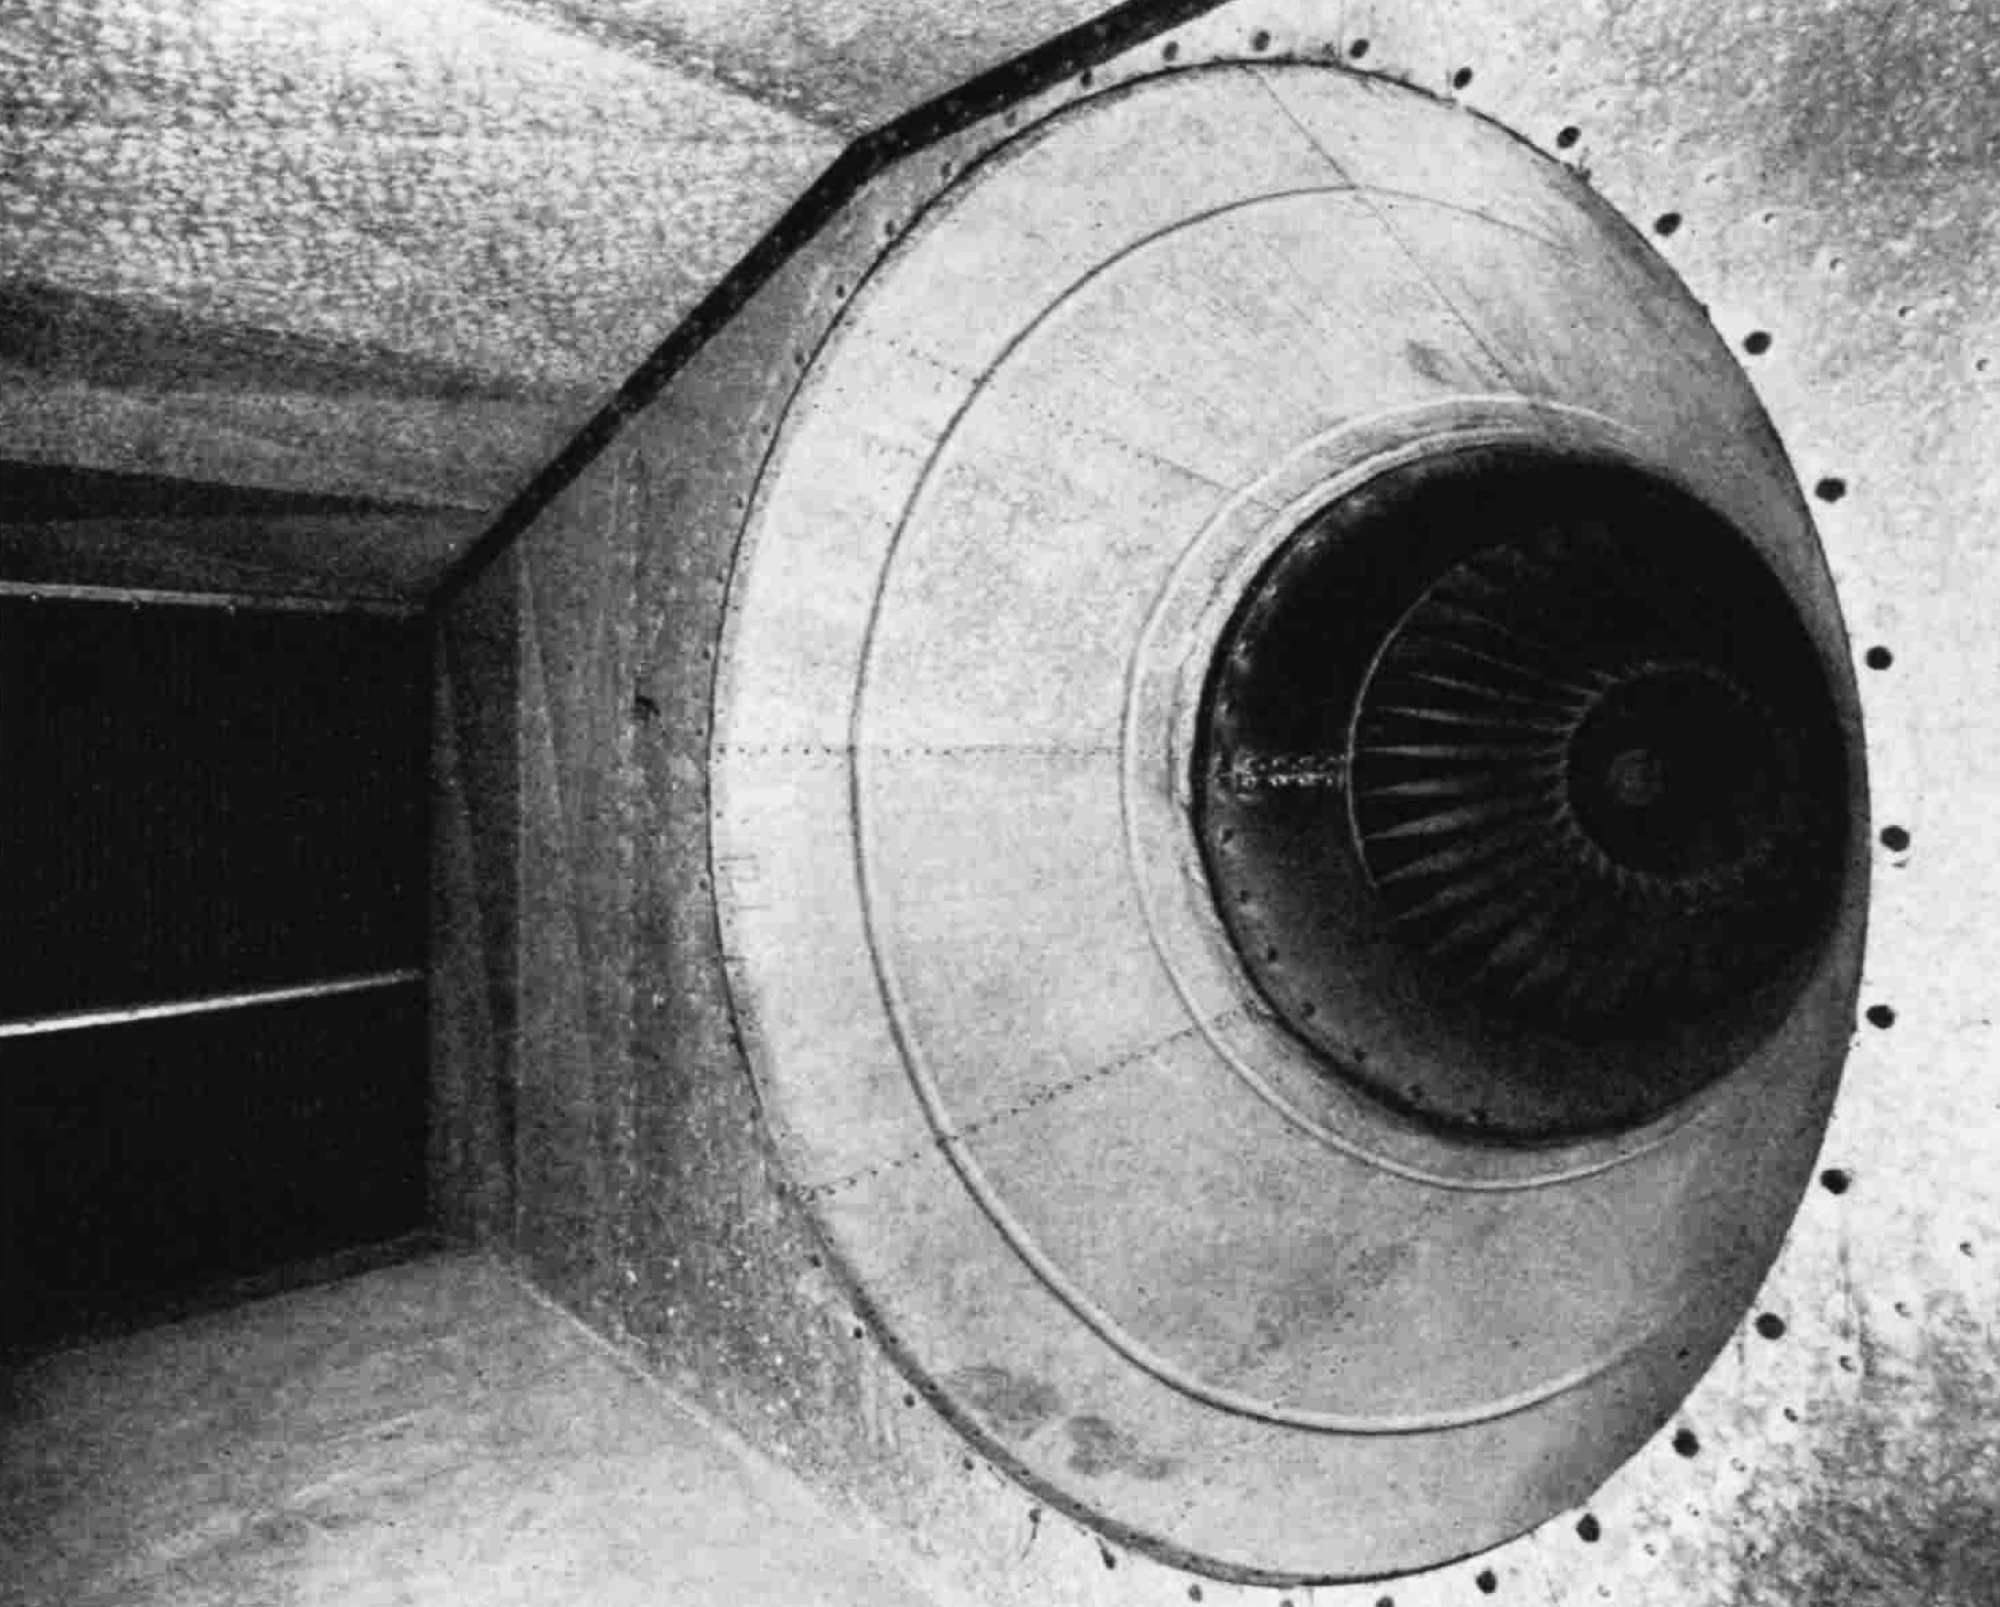 A massive circular duct through concrete